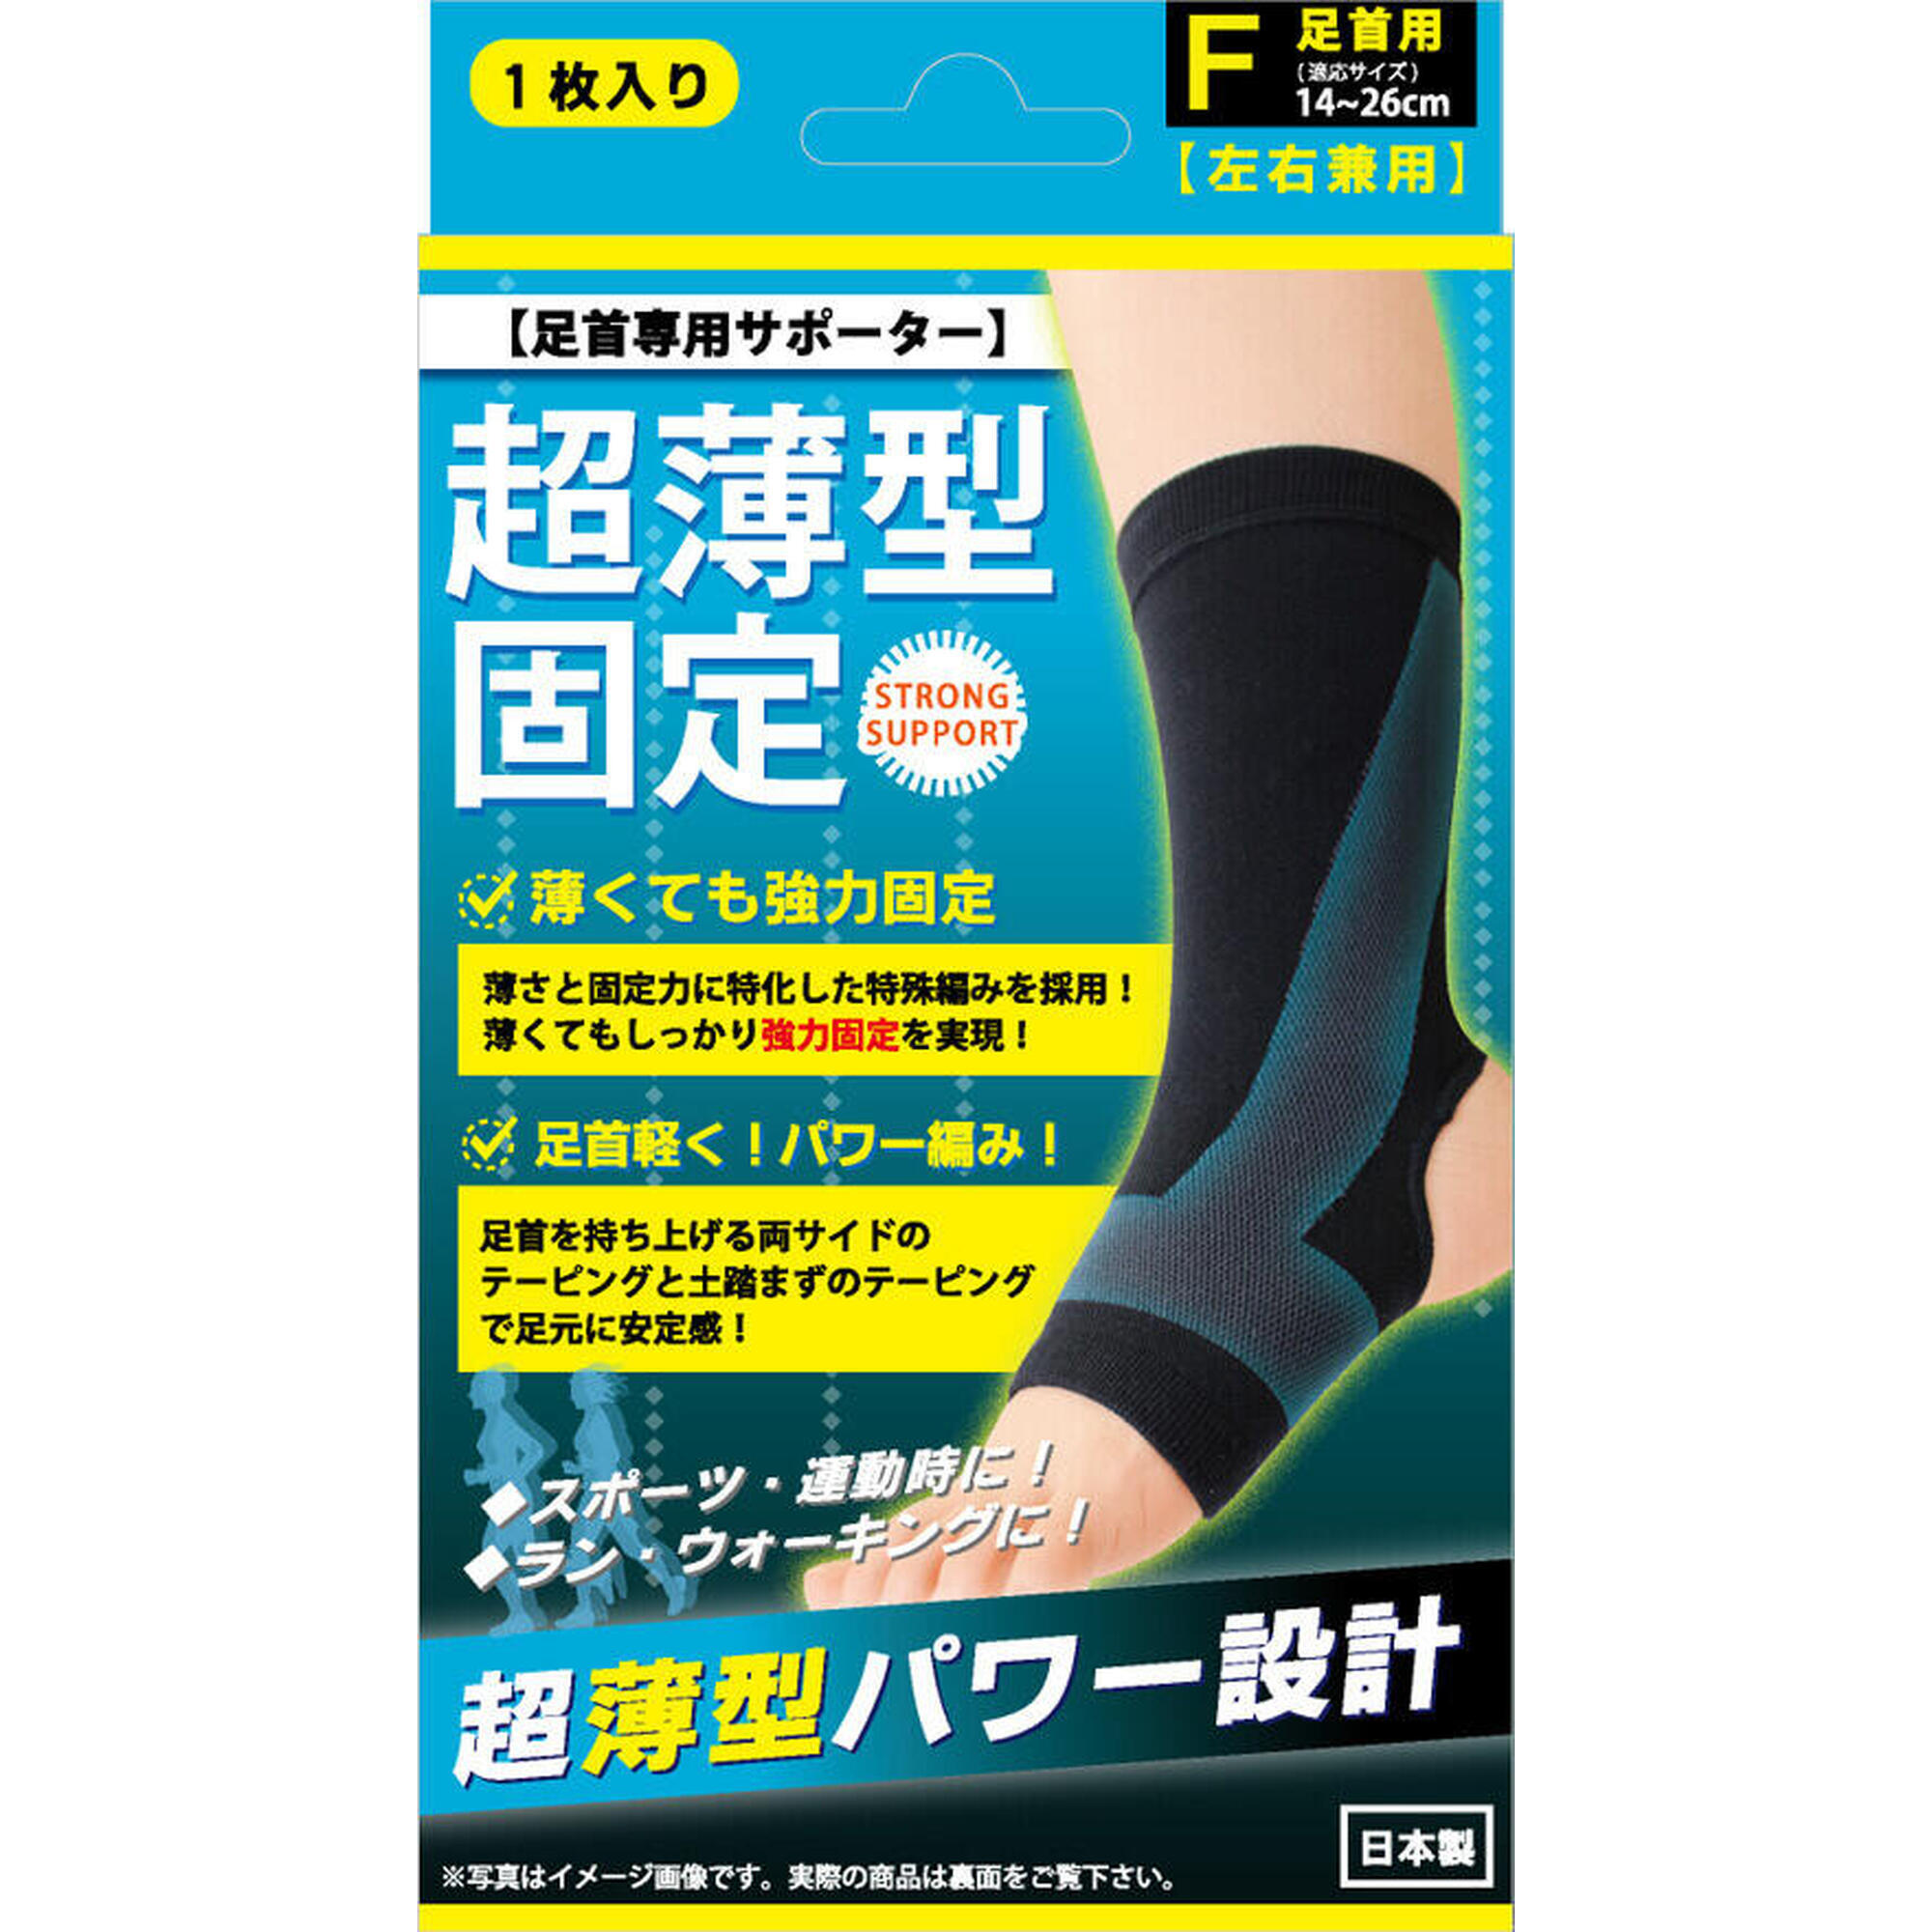 Ultrathin Ankle Support - Black